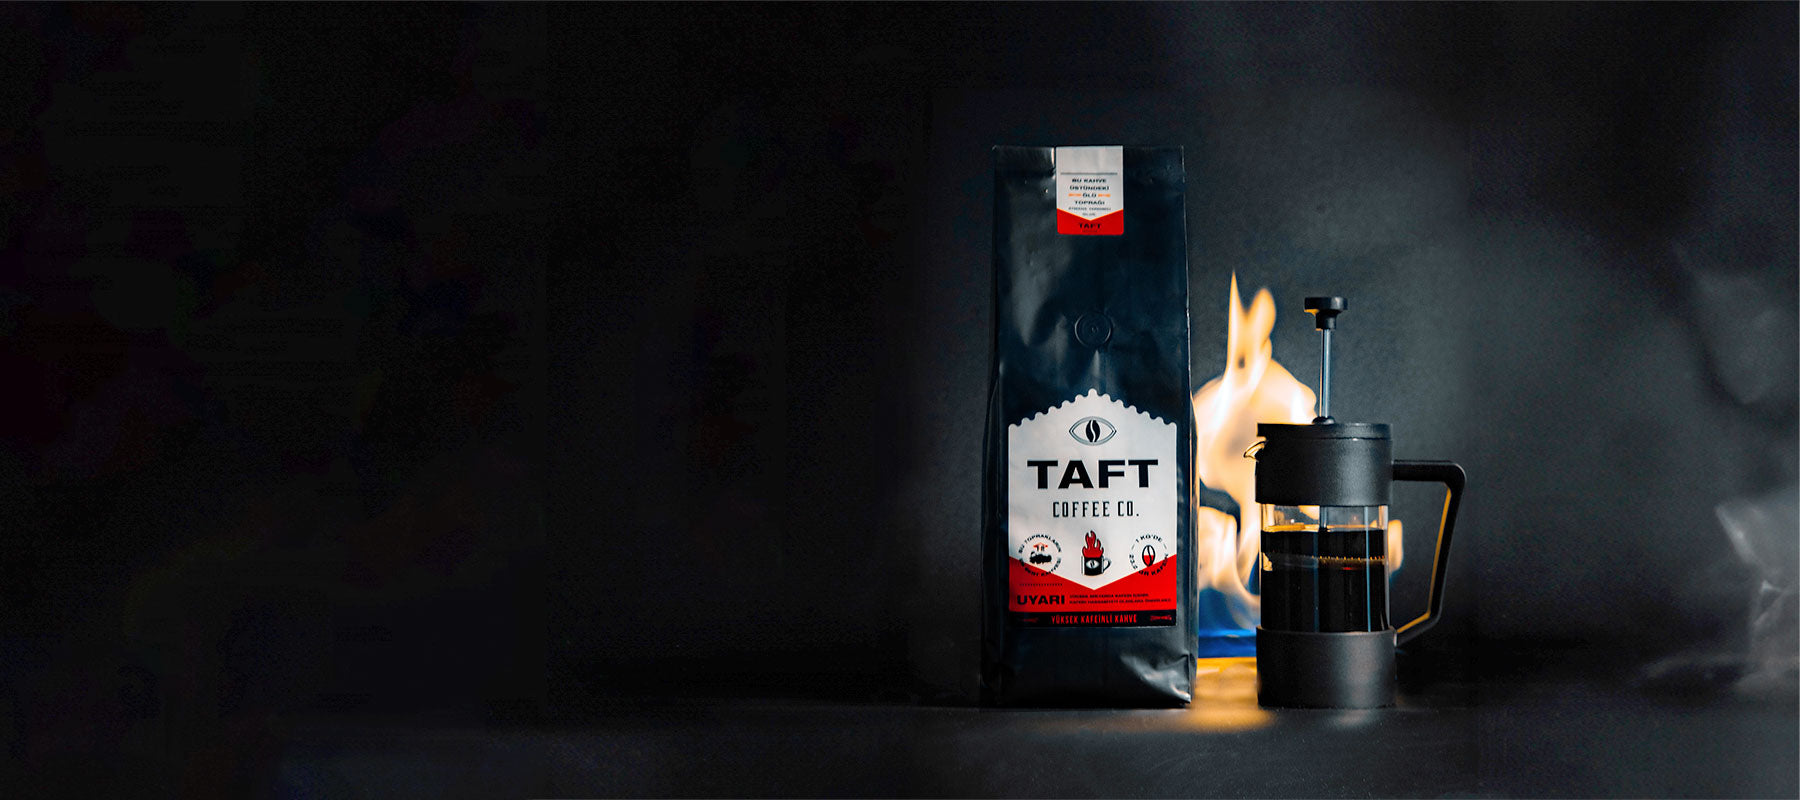 TAFT Coffee Yüksek Kafeinli Filtre Kahve French Press Seti ve Tüm Setler